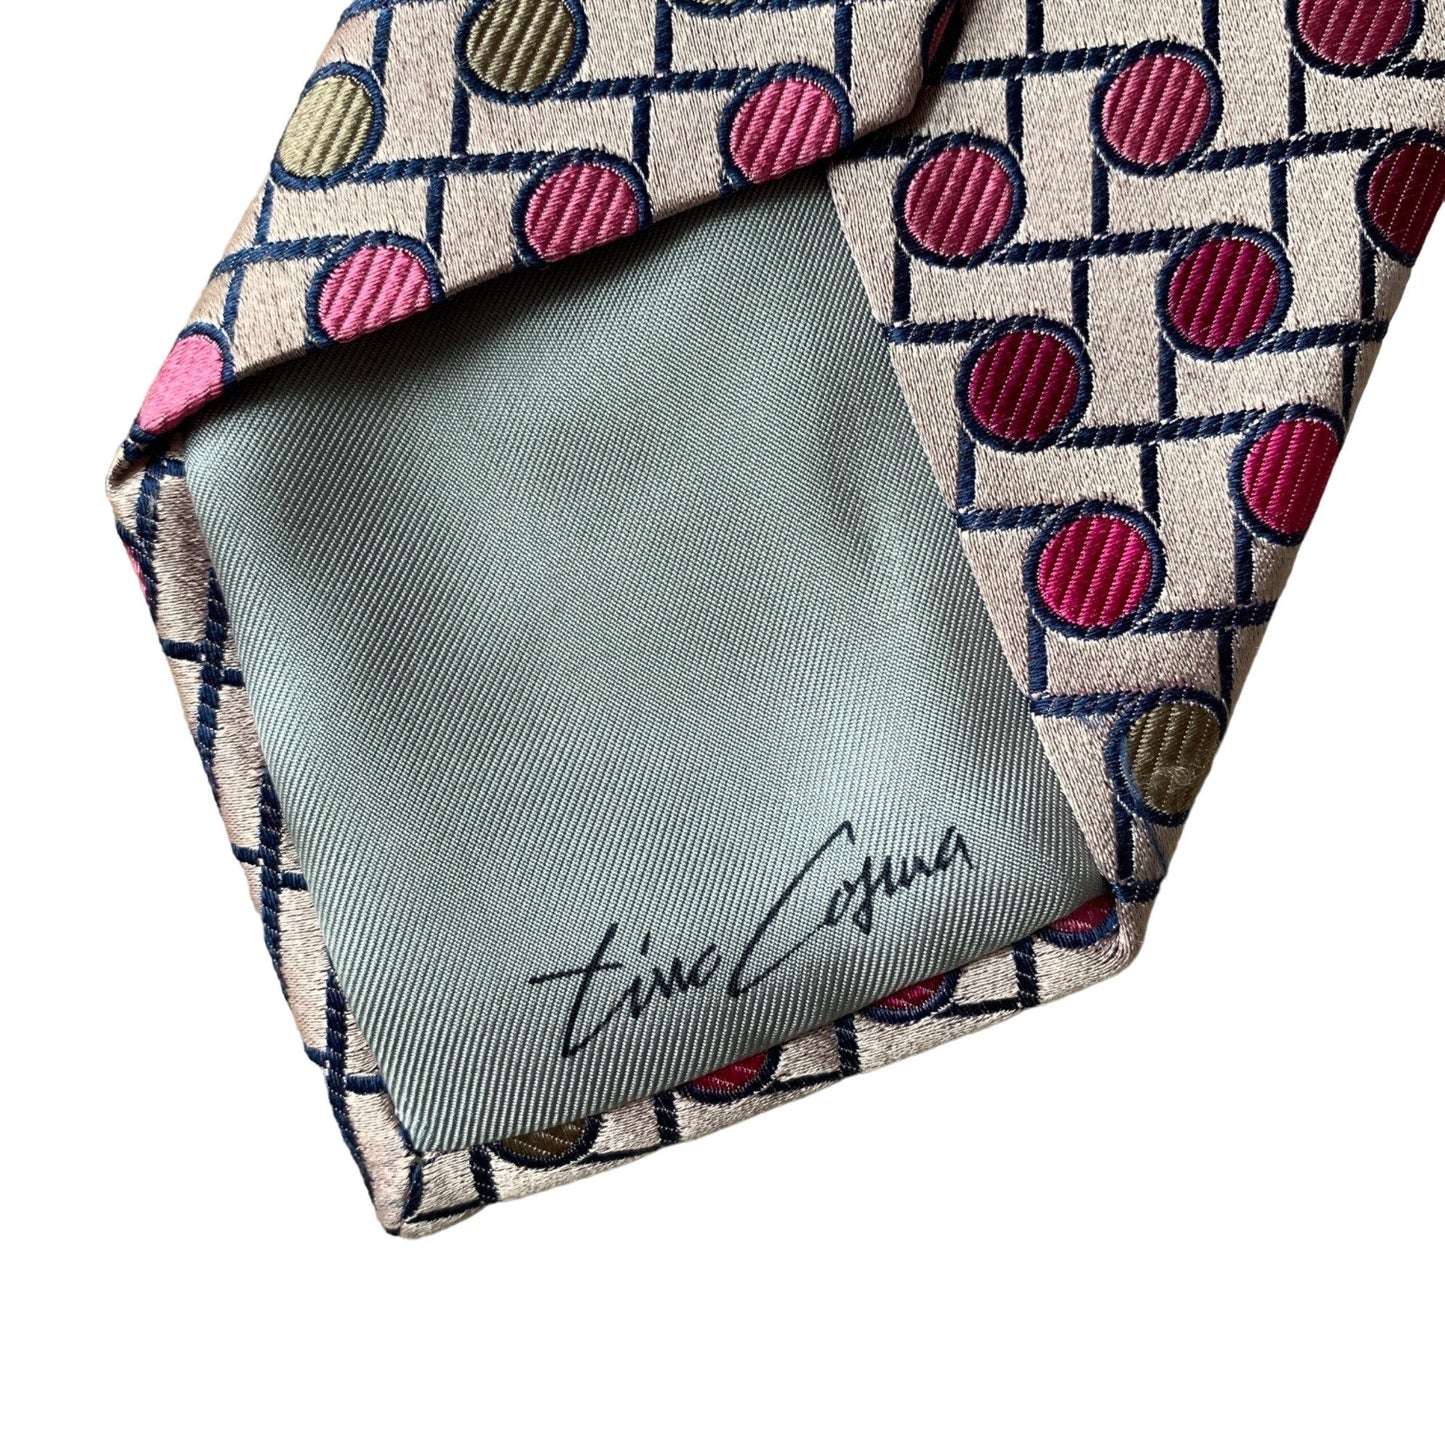 Tina Cosina Pink Geometric Tie Made in Italy